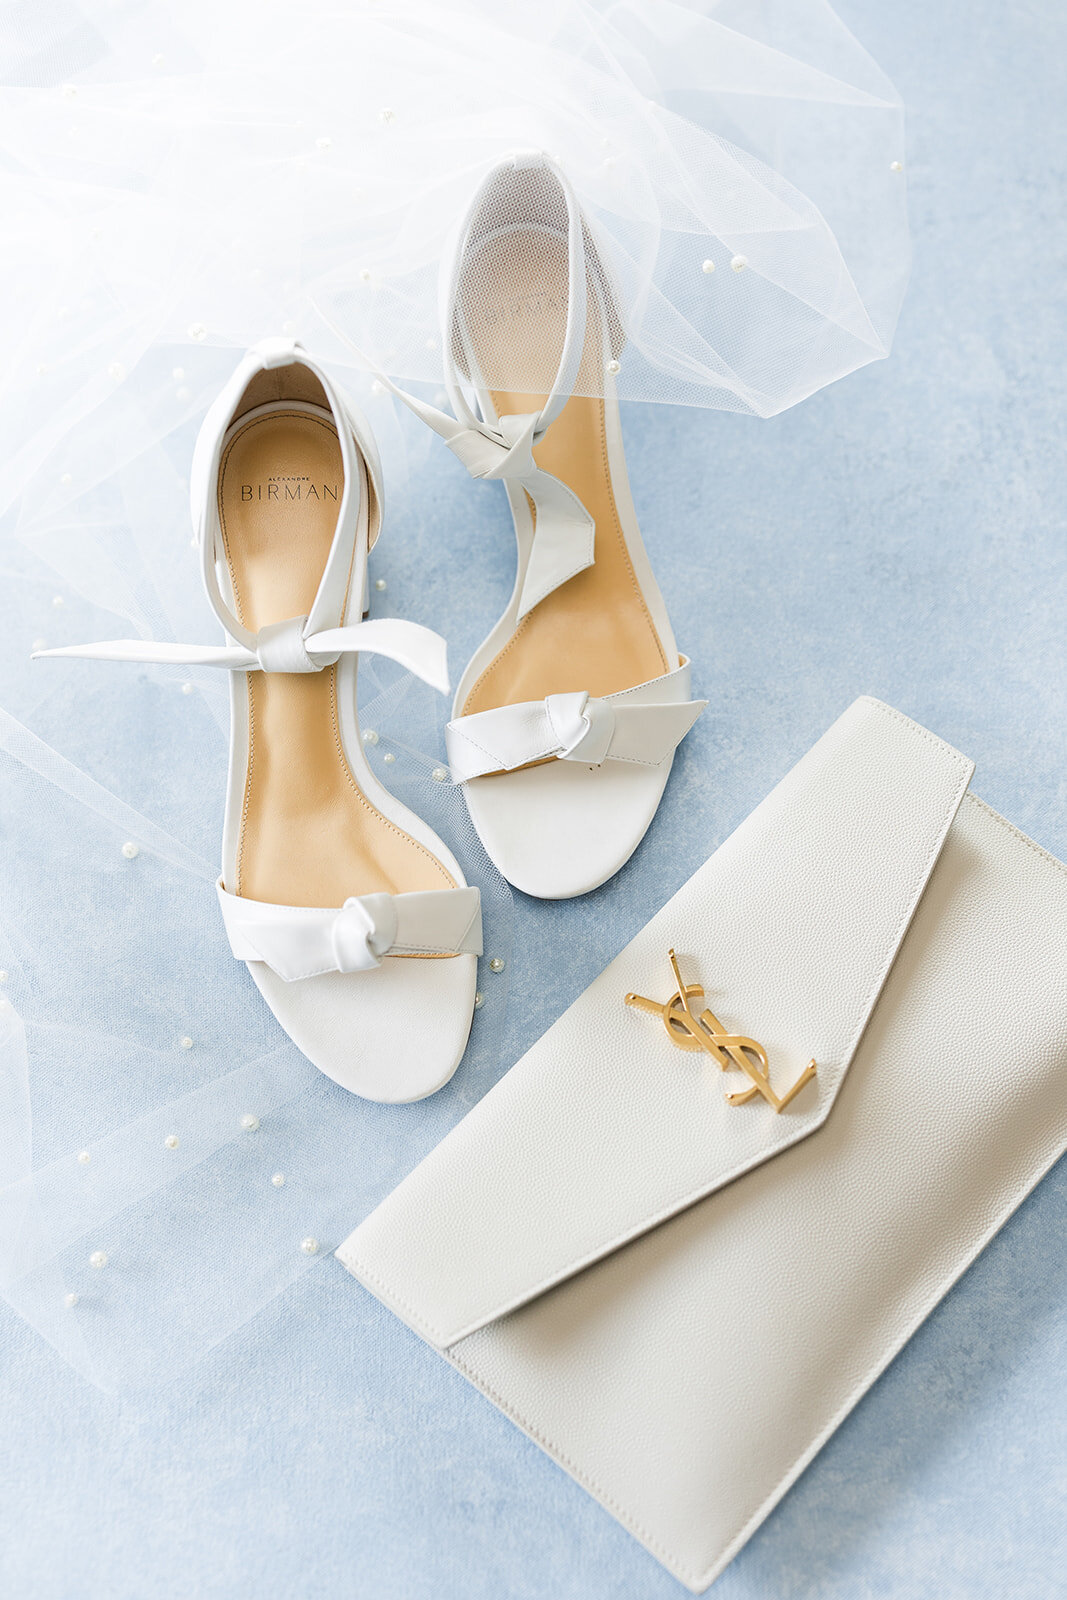 Wedding Day details Shoes and designer hand bag